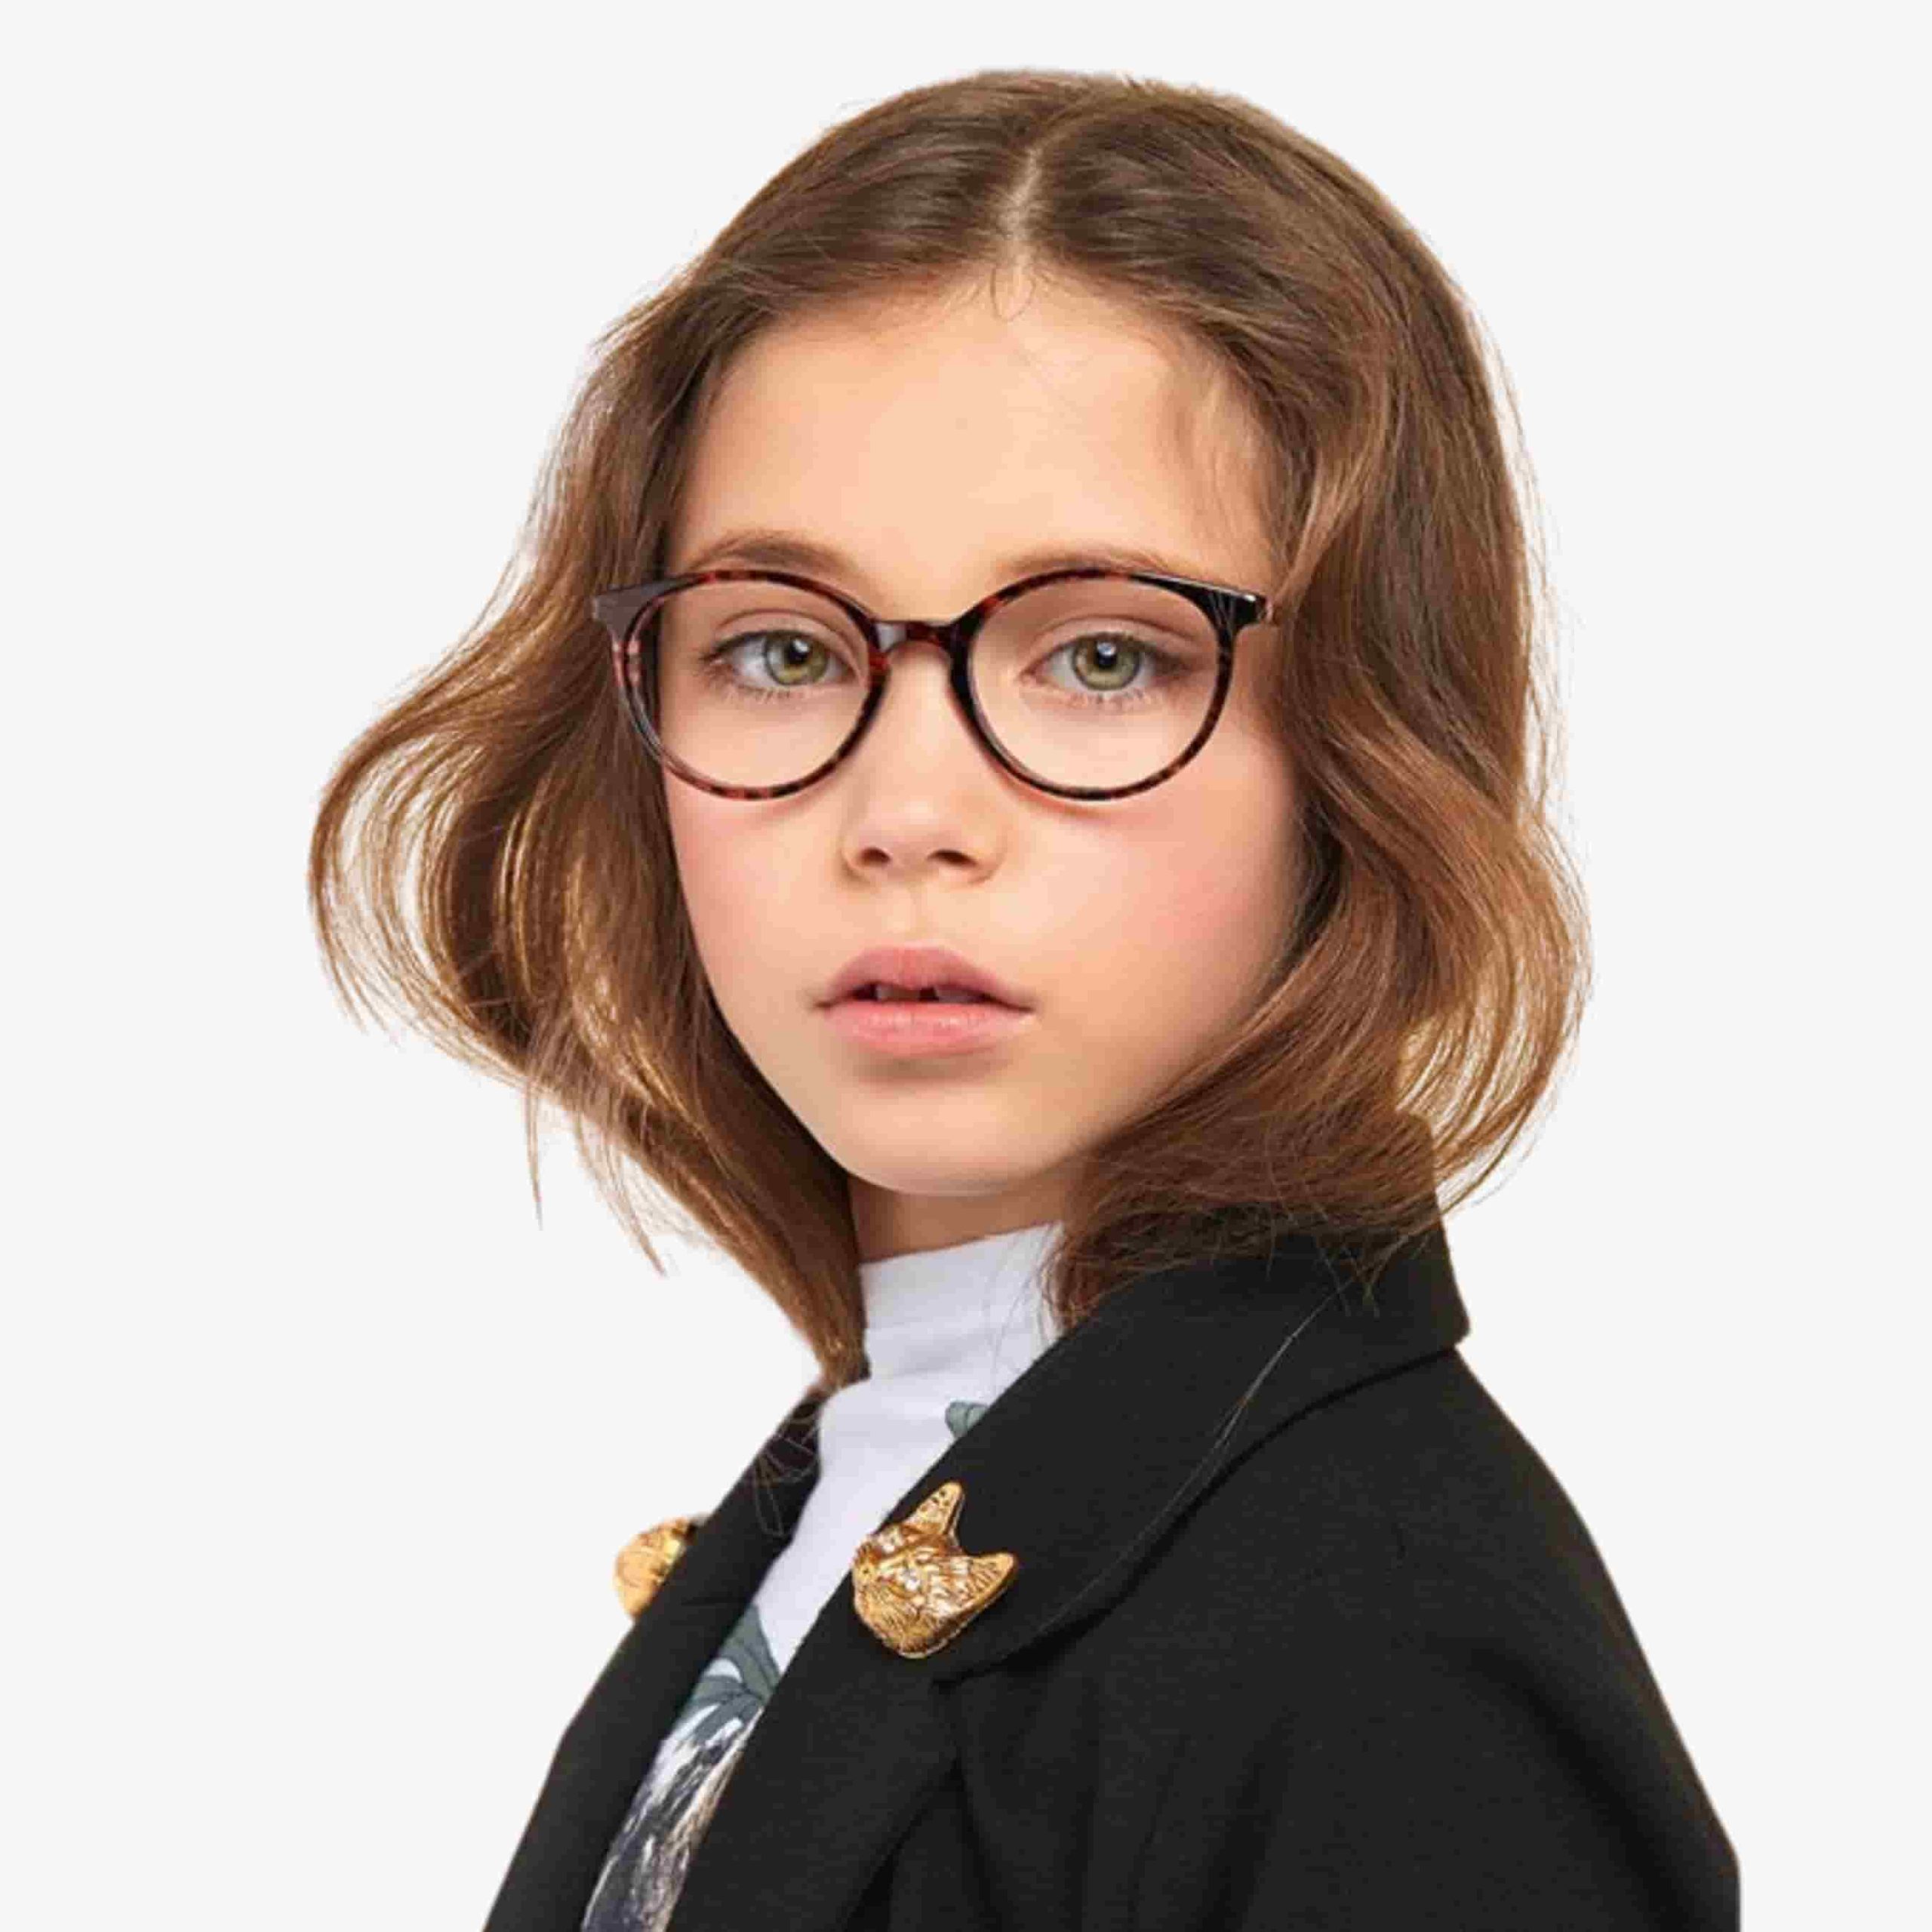 Buy Now Kids Trending Eyewear 100% Authentic Branded Eyeglasses and Sungalsses at Mittal Optics